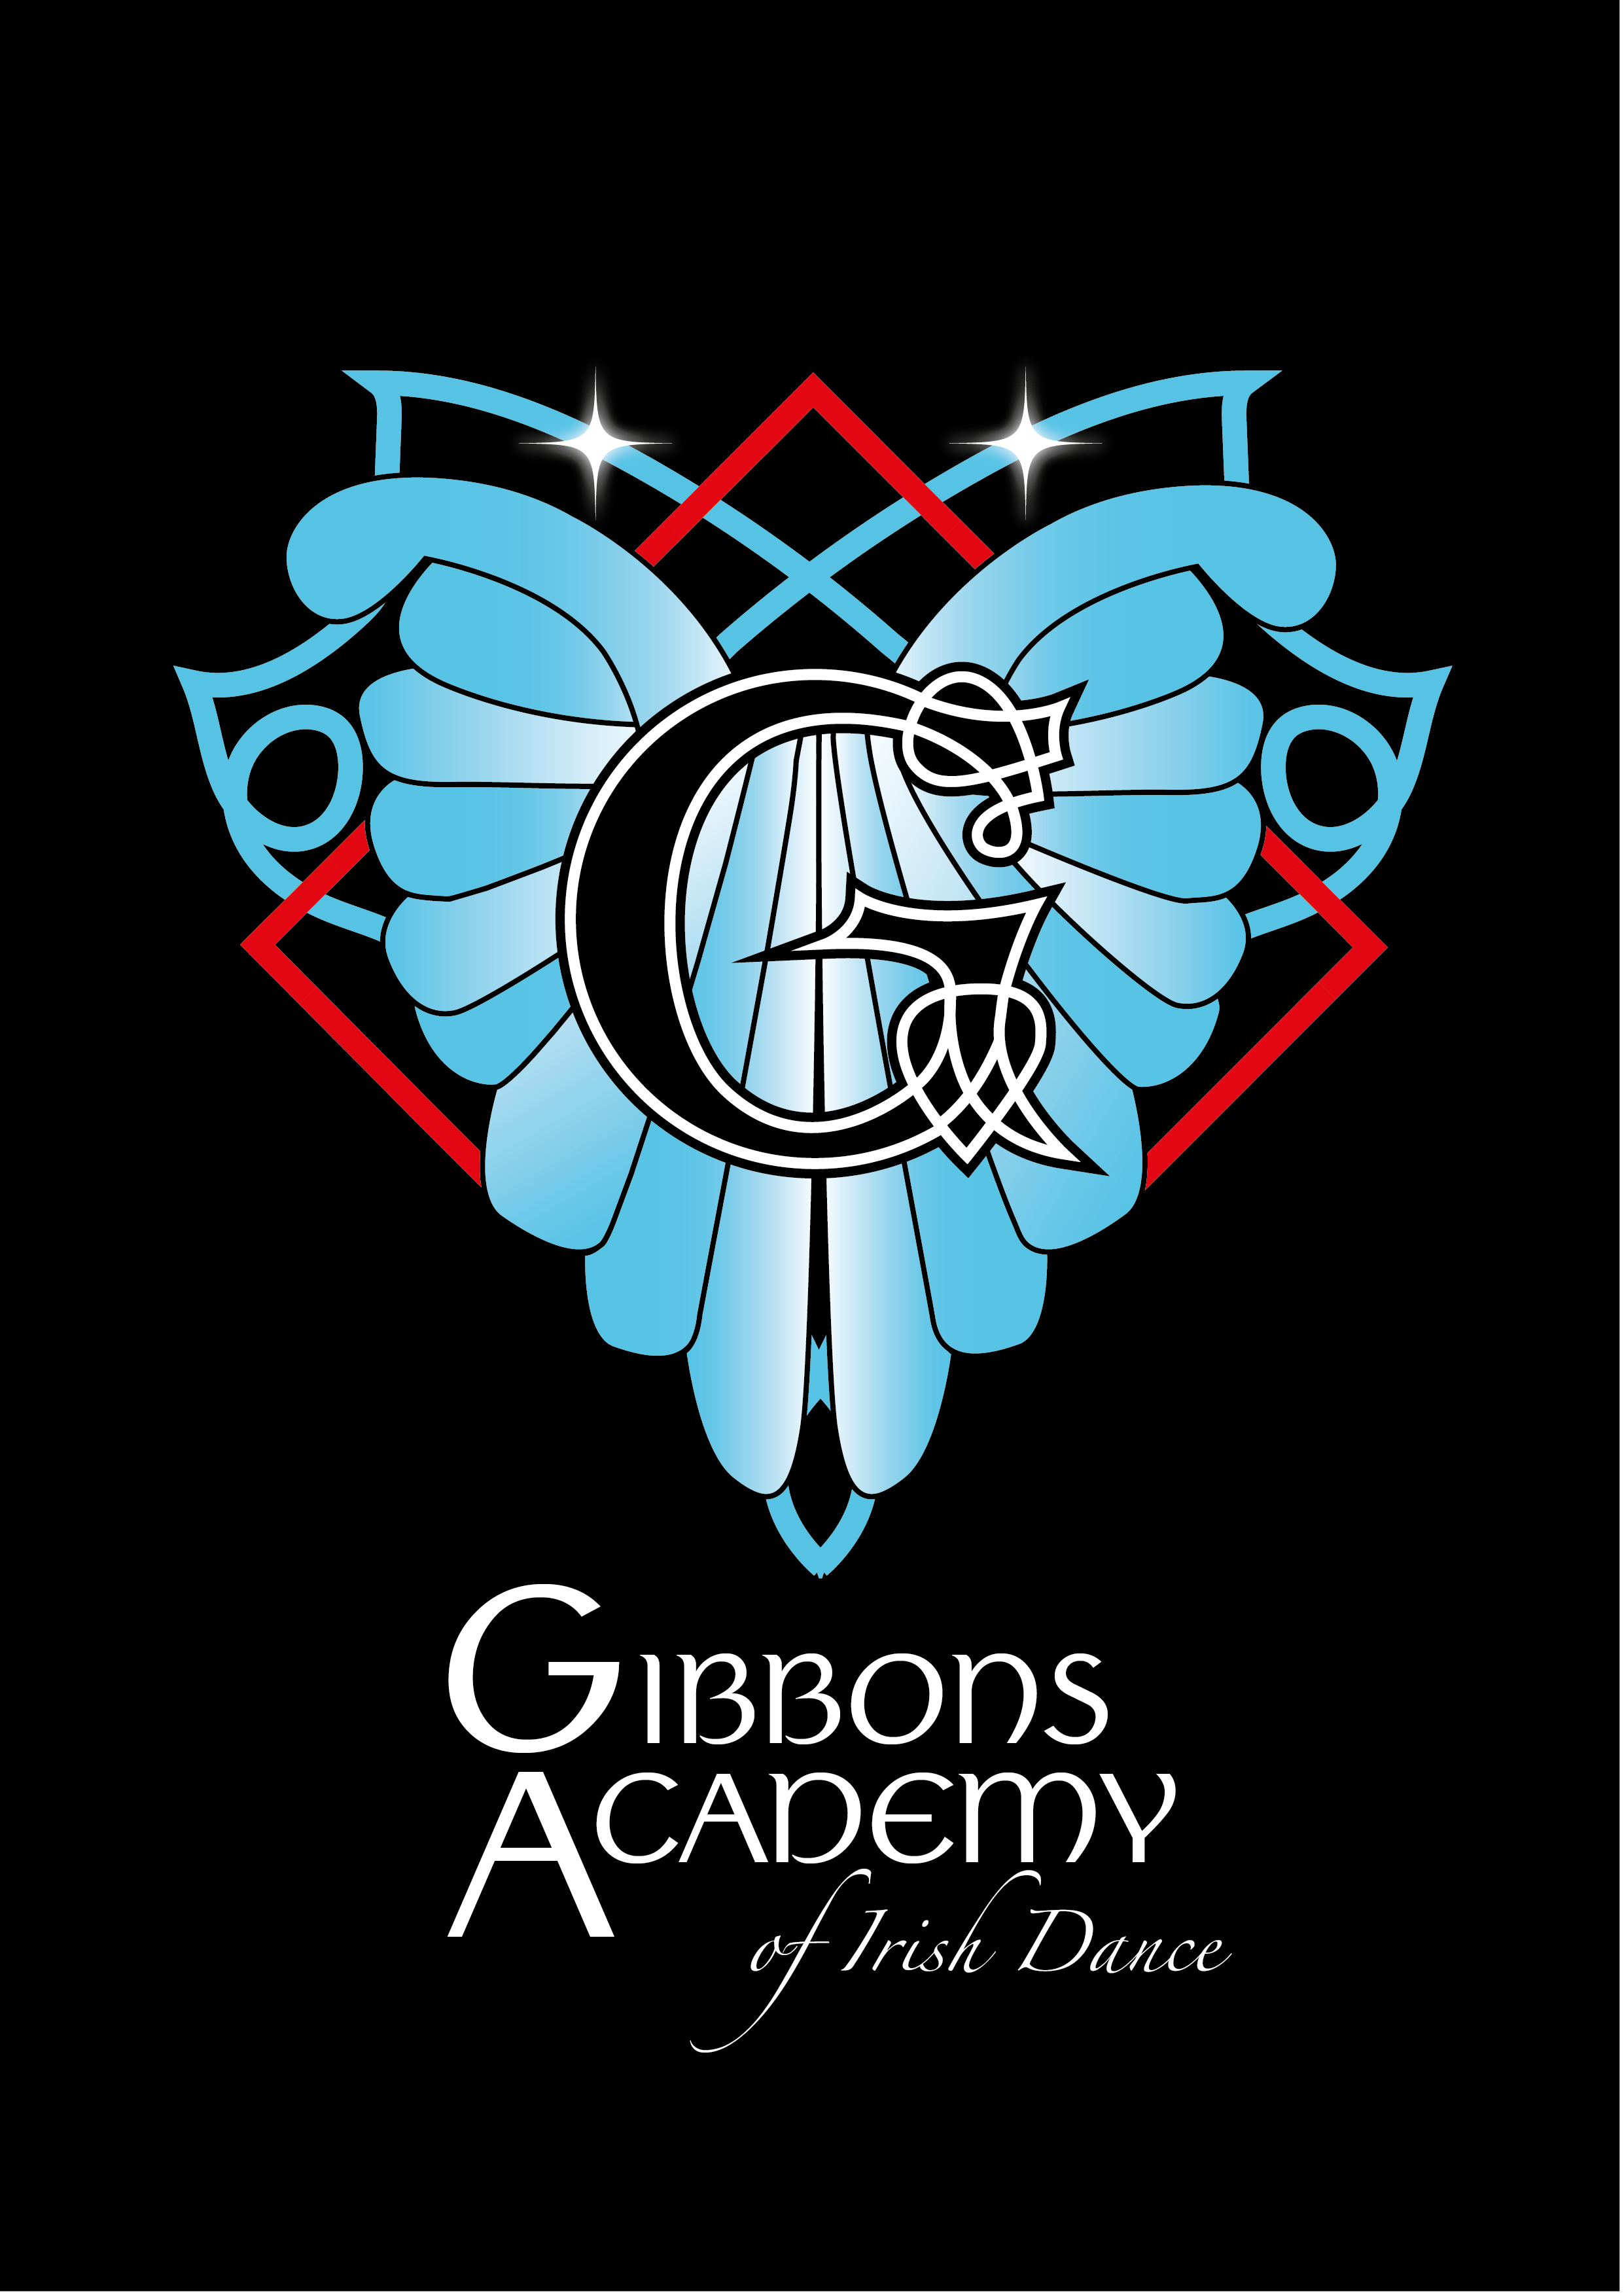 Gibbons Academy of Irish Dance logo